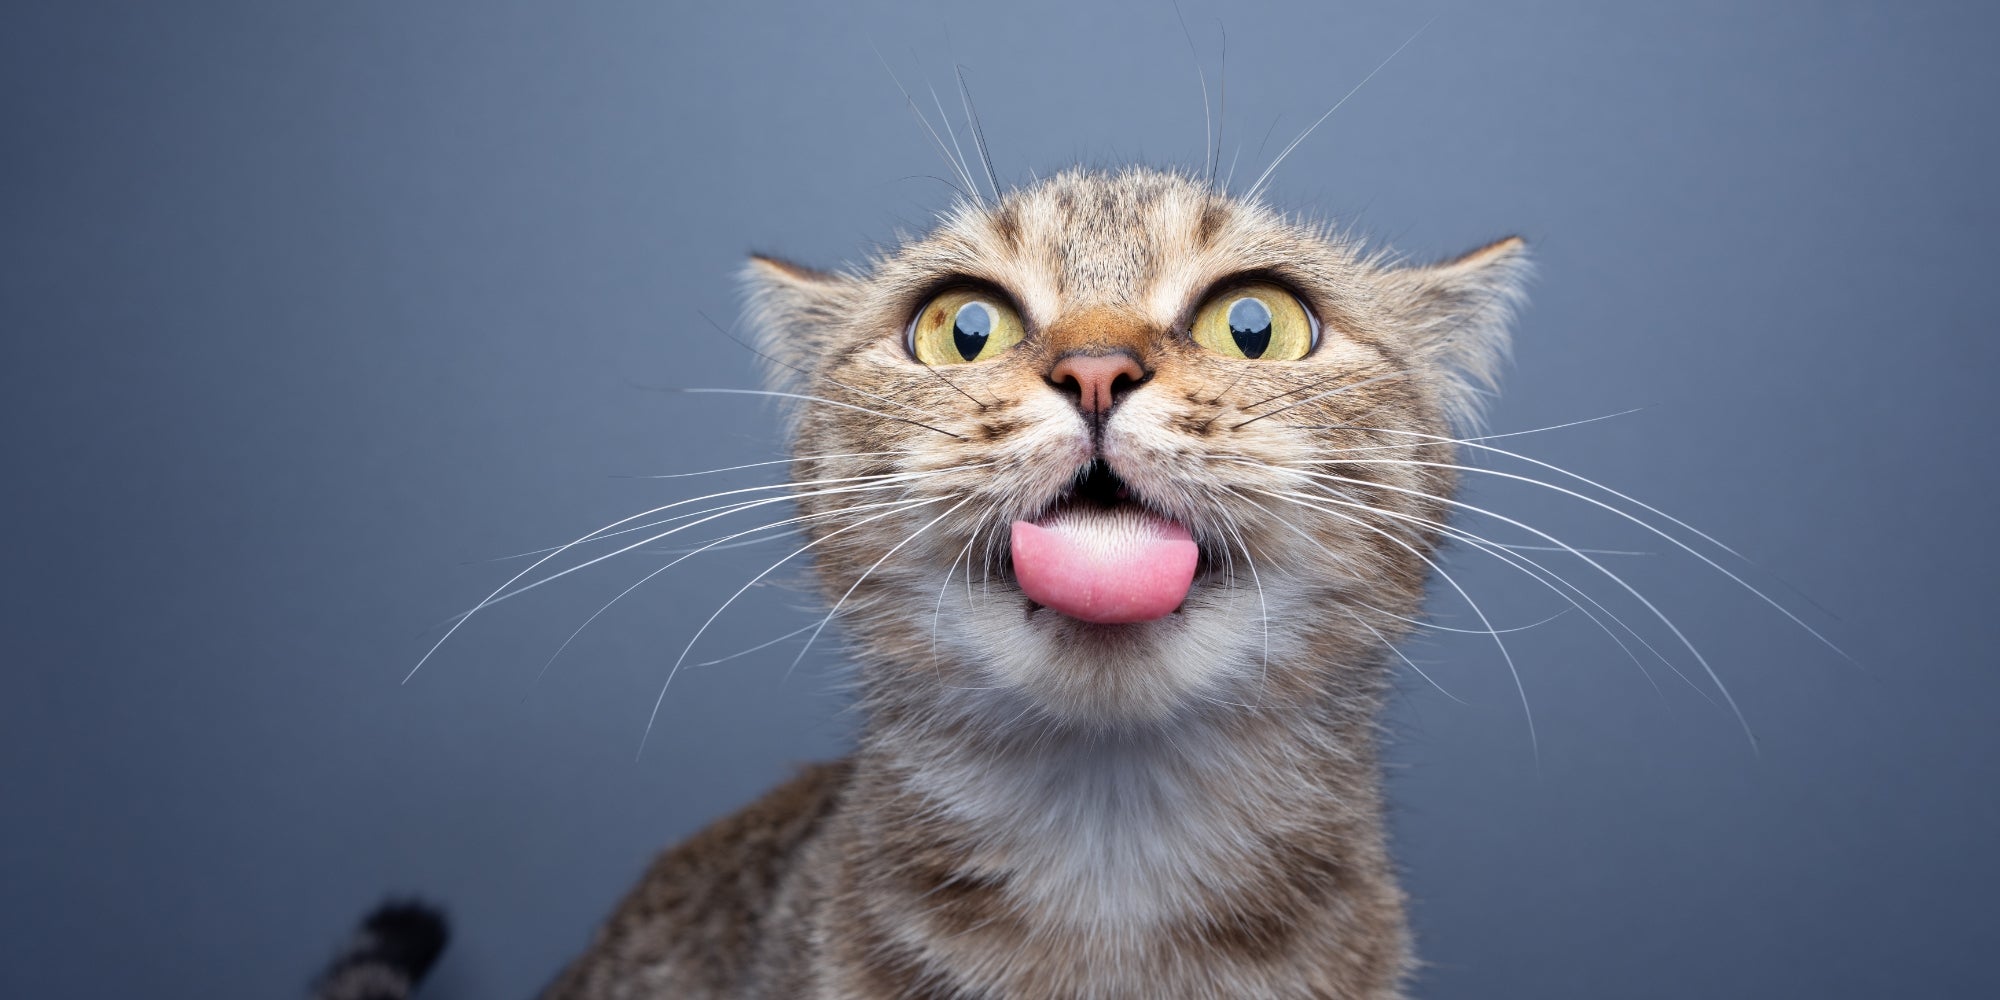 gato tonto haciendo cara graciosa con la lengua fuera